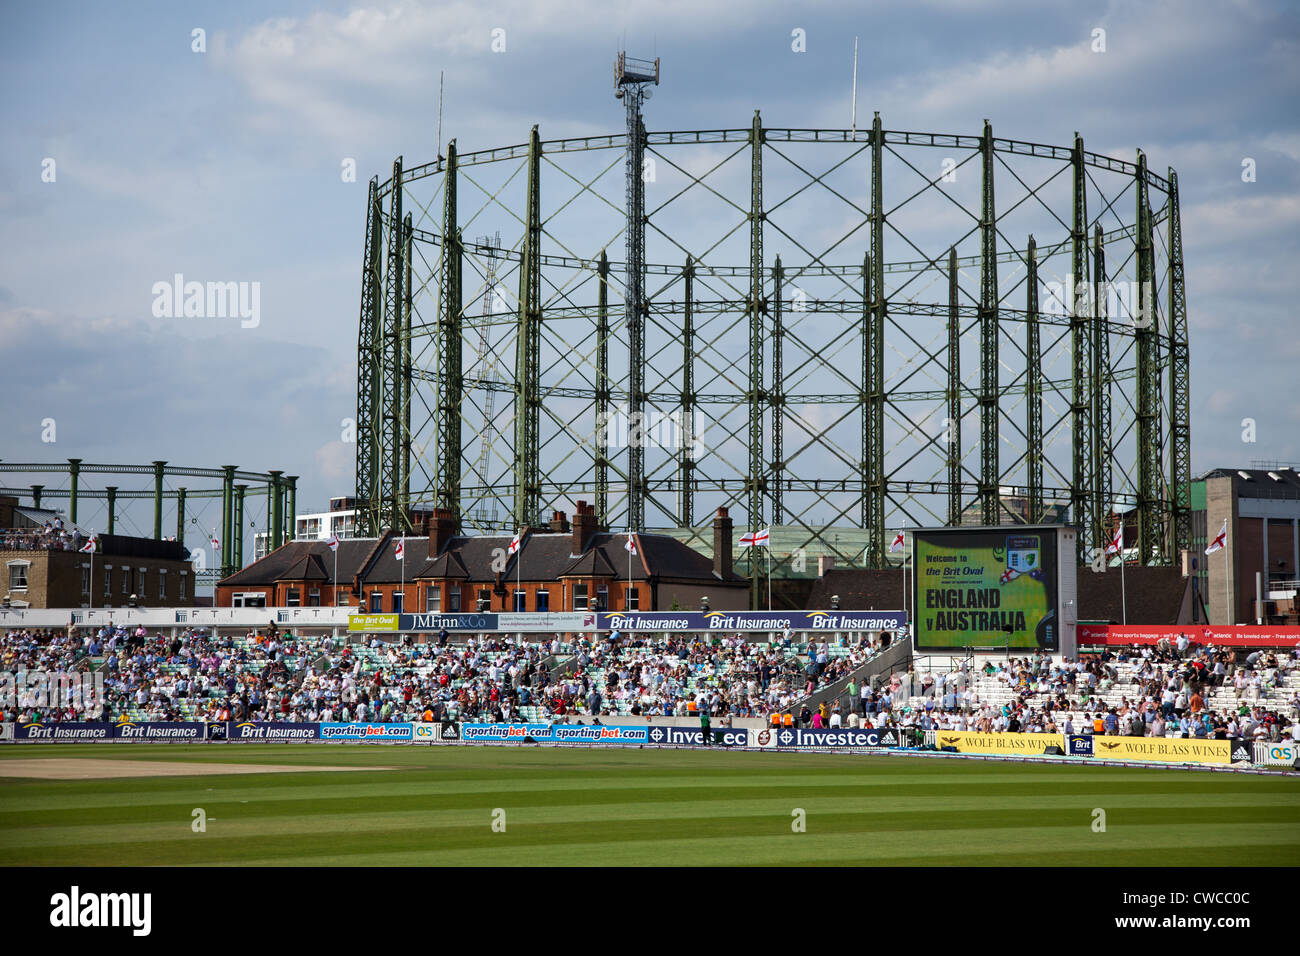 The Oval cricket ground during a One Day International, England v Australia UK Stock Photo